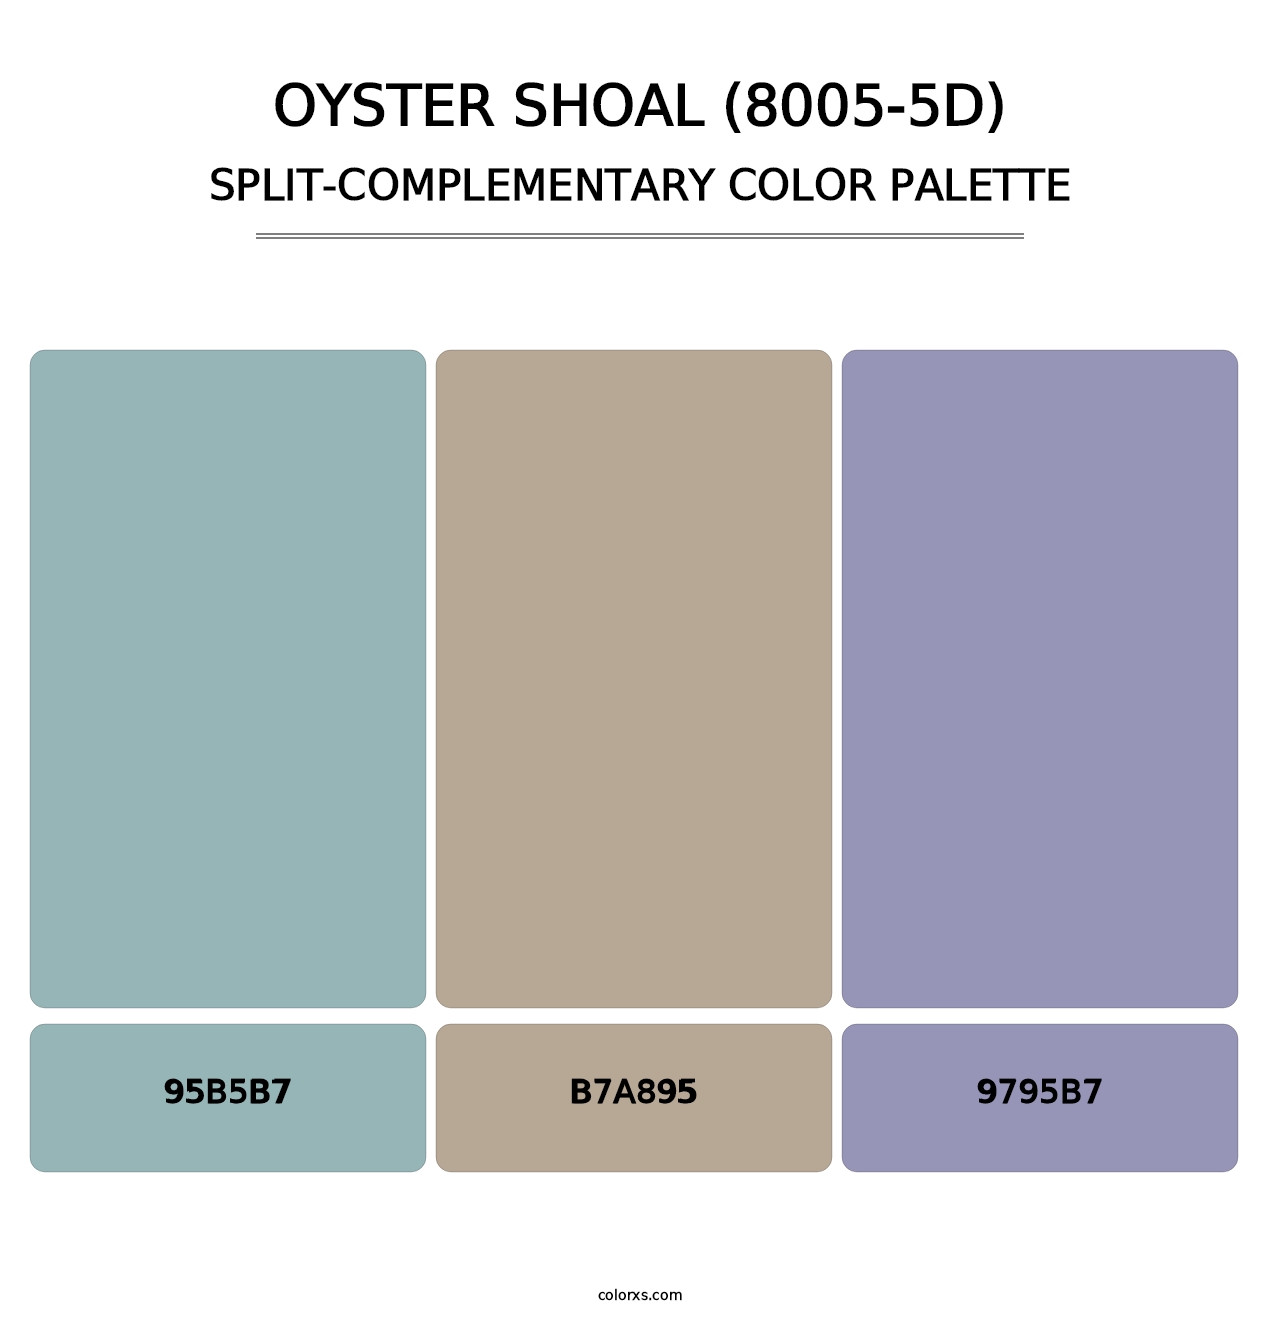 Oyster Shoal (8005-5D) - Split-Complementary Color Palette